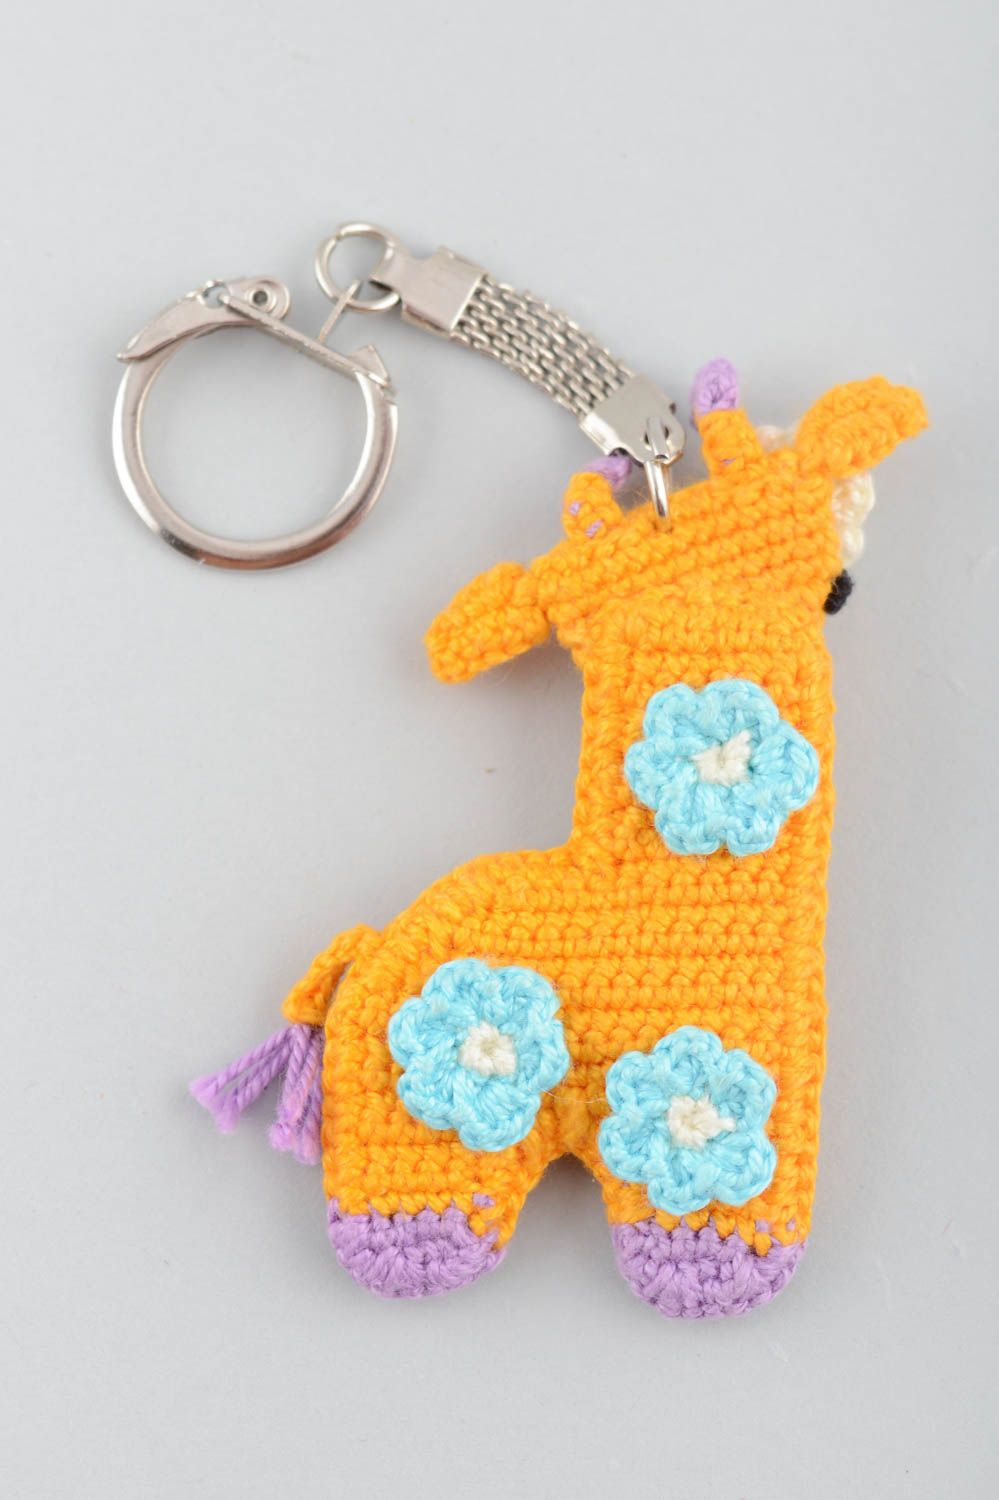 Keychain with soft giraffe toy cute little yellow crocheted handmade accessory photo 2